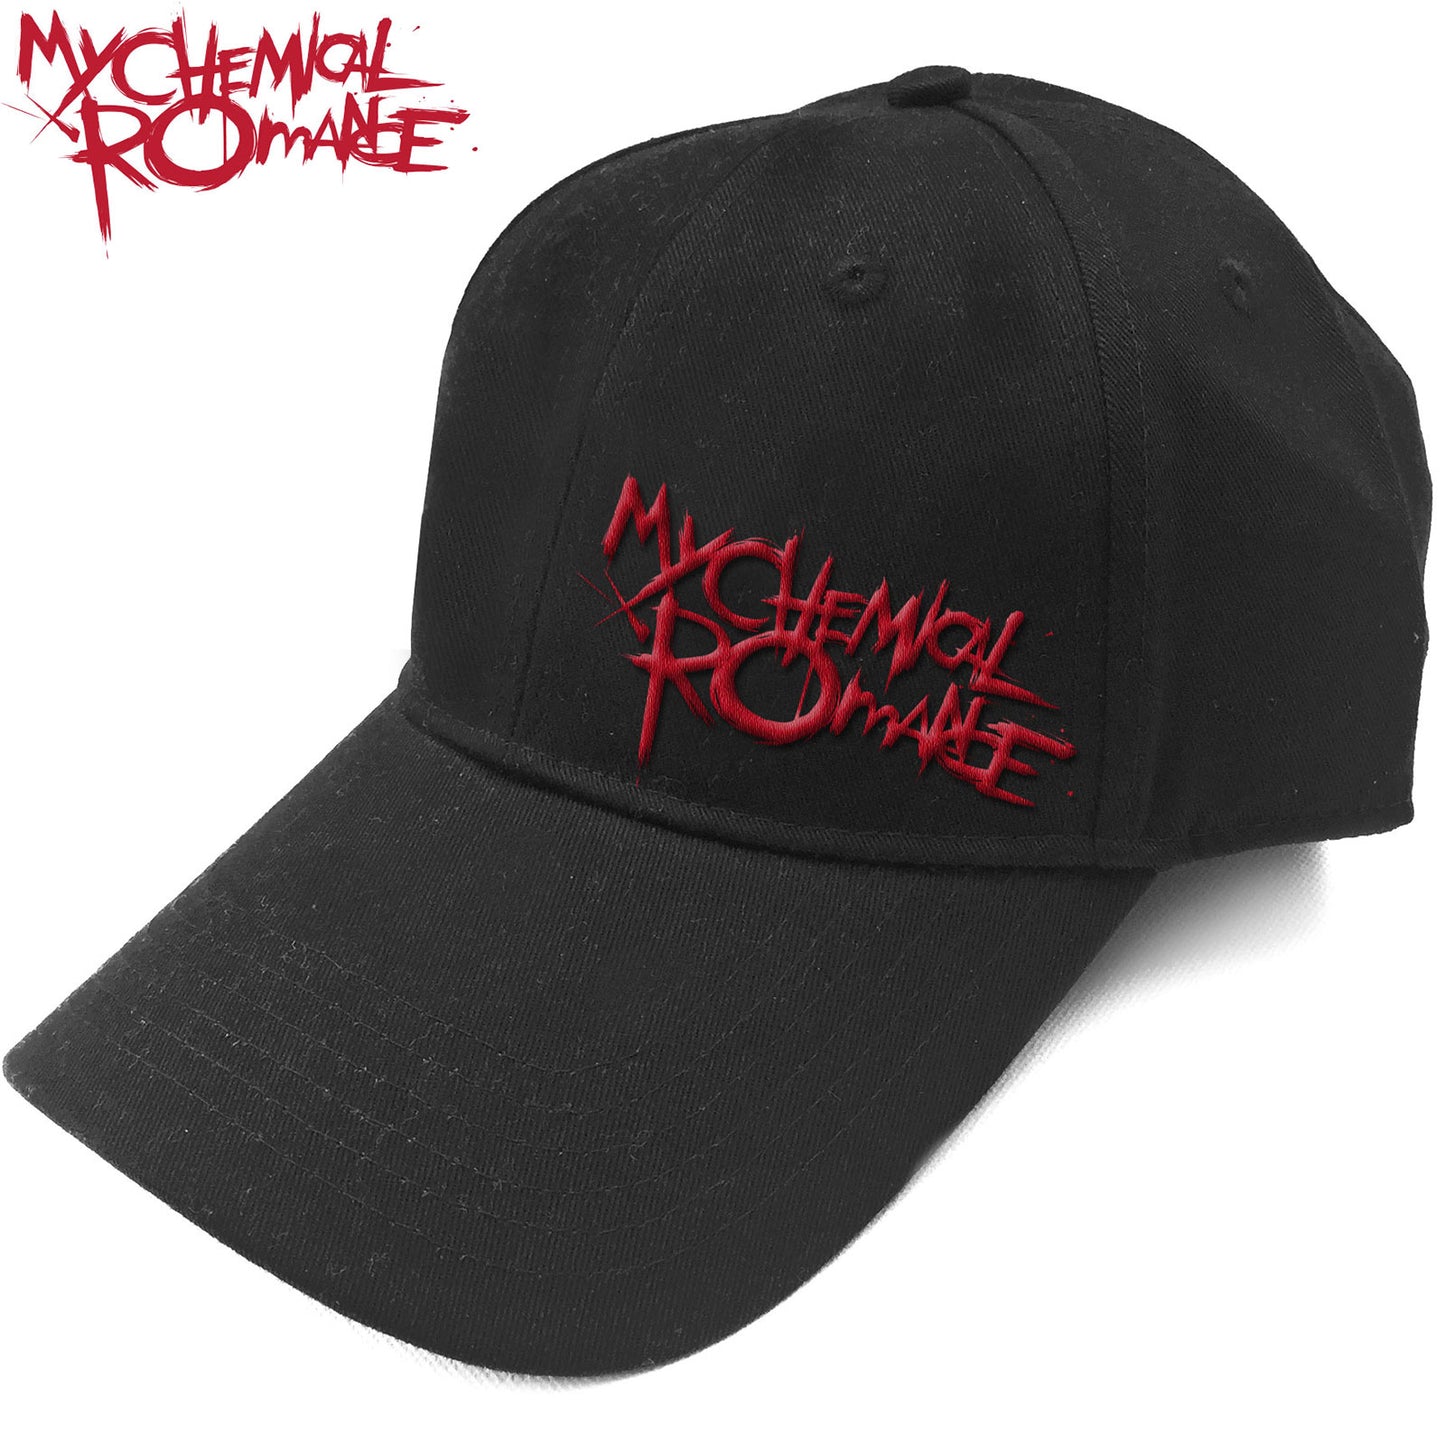 My Chemical Romance Baseball Cap: Black Parade Logo